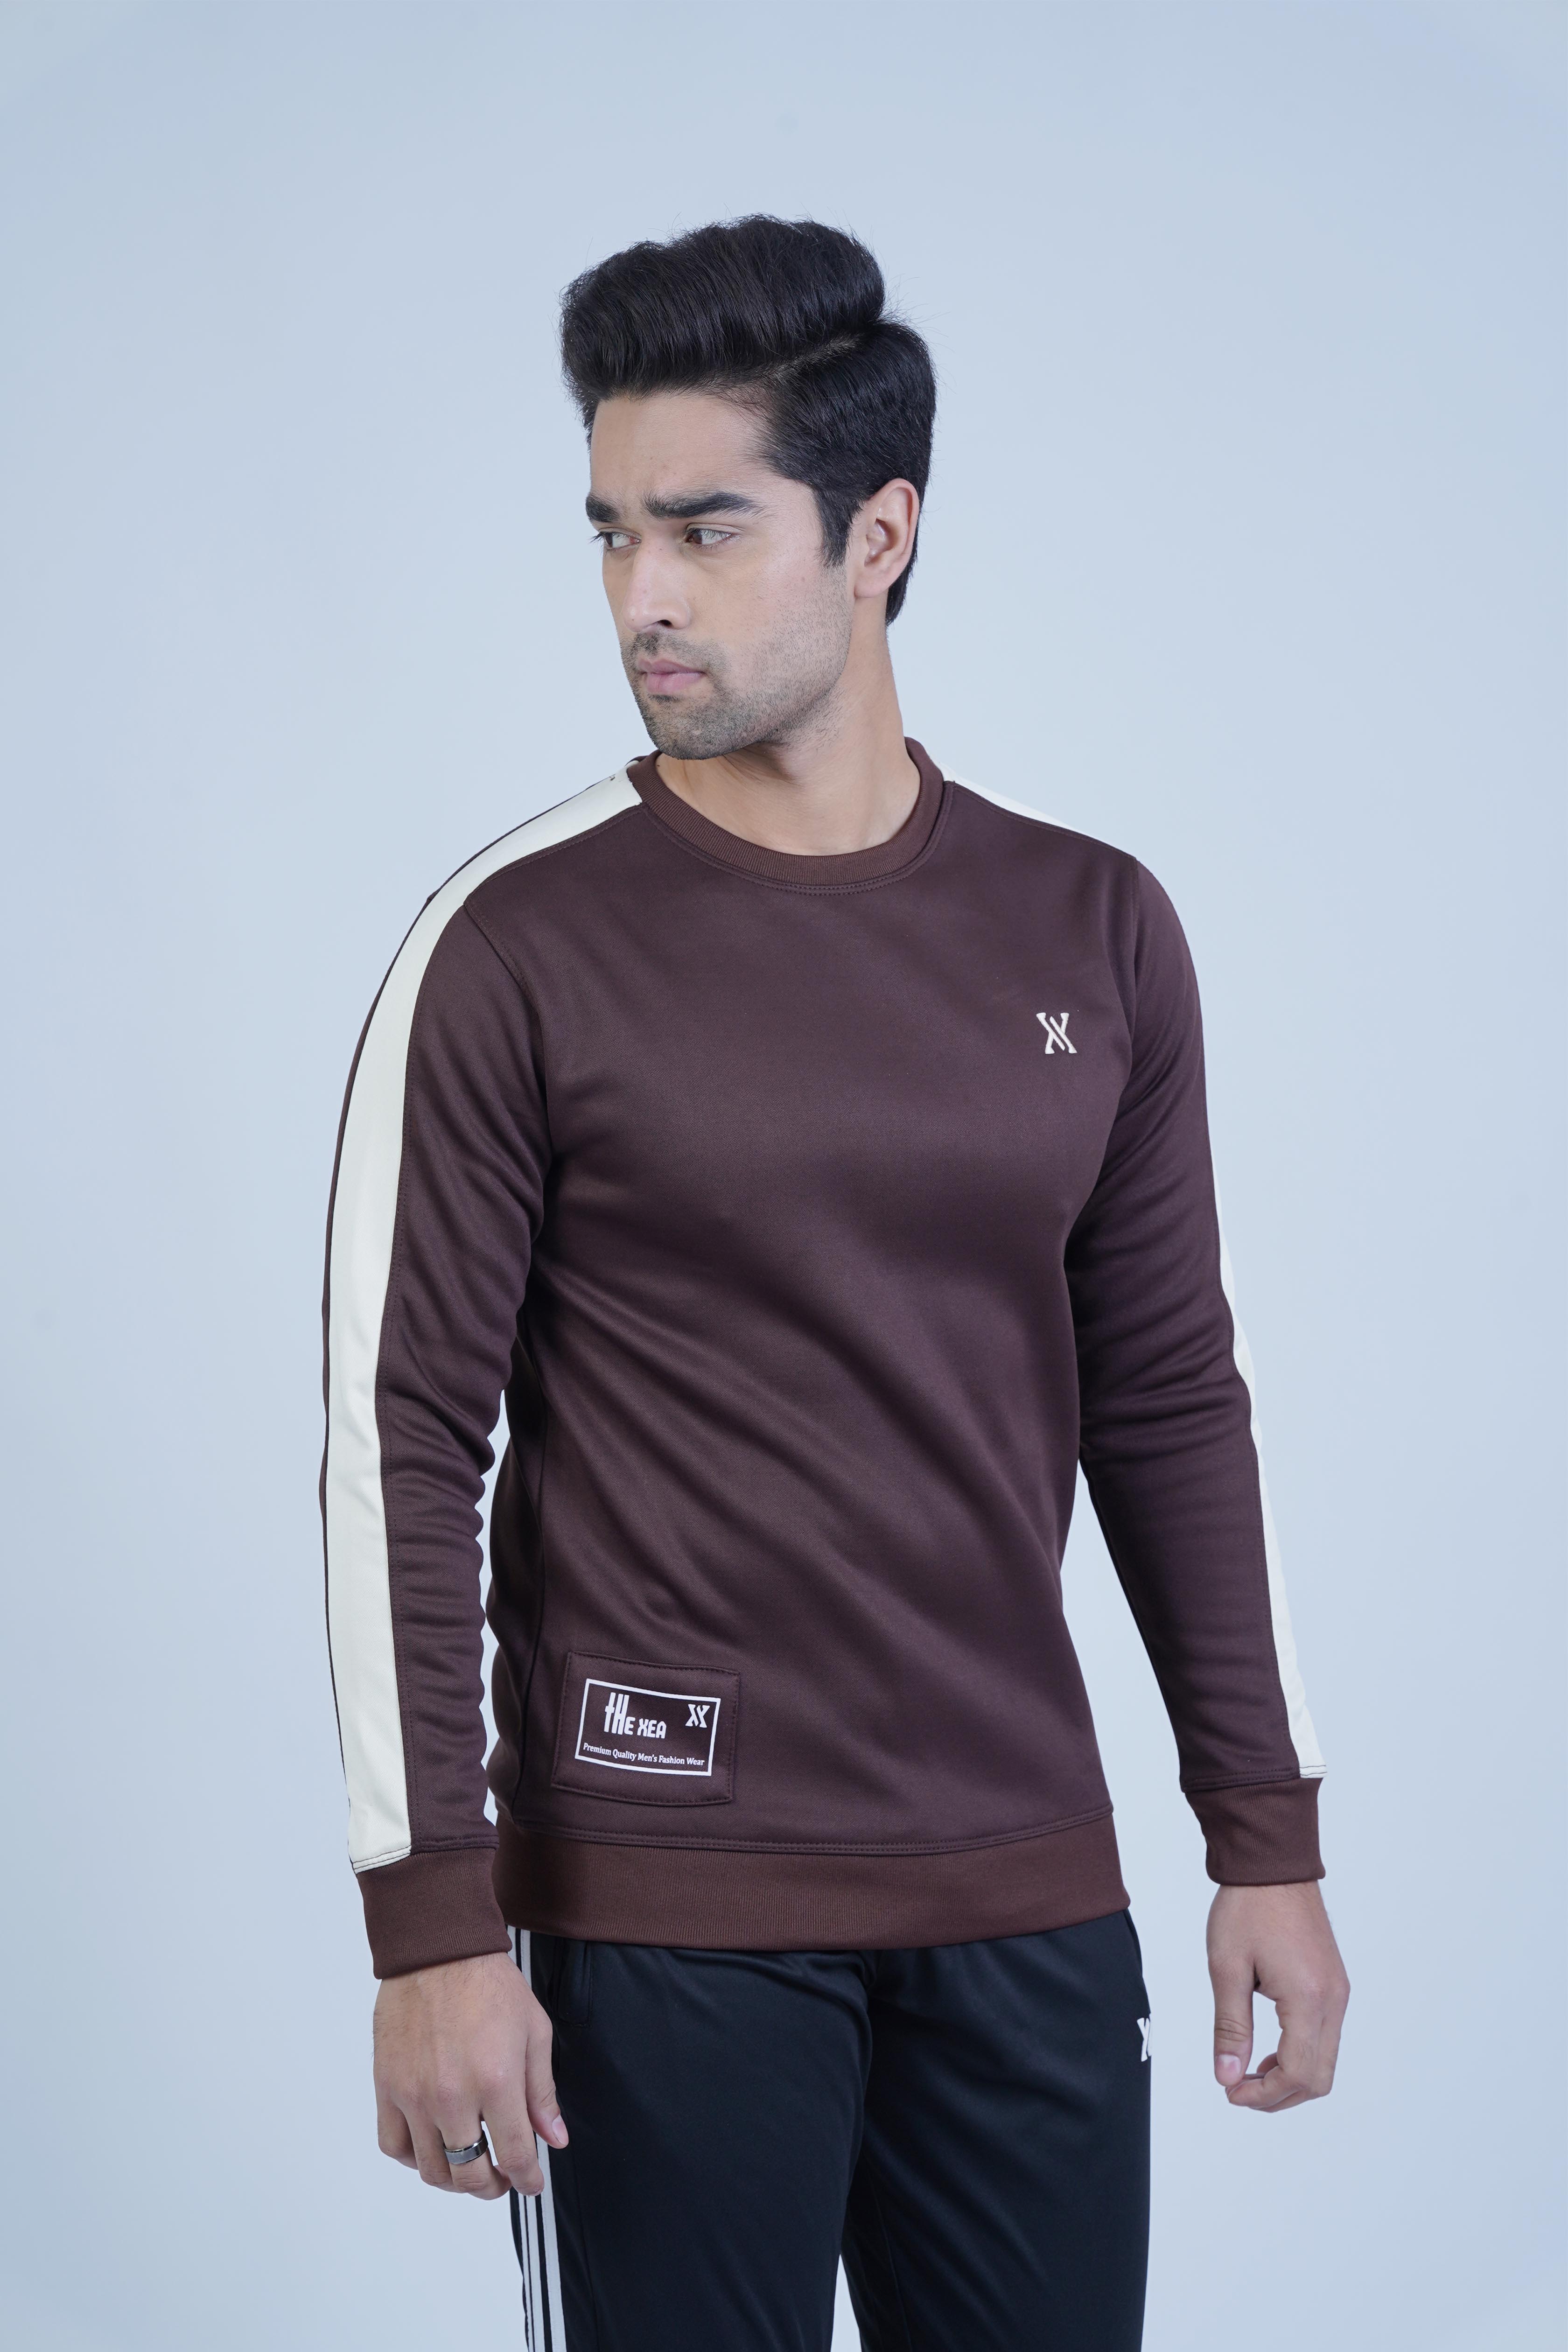 Flexible Fashion: The Xea Flex Fit Brown Sweatshirt